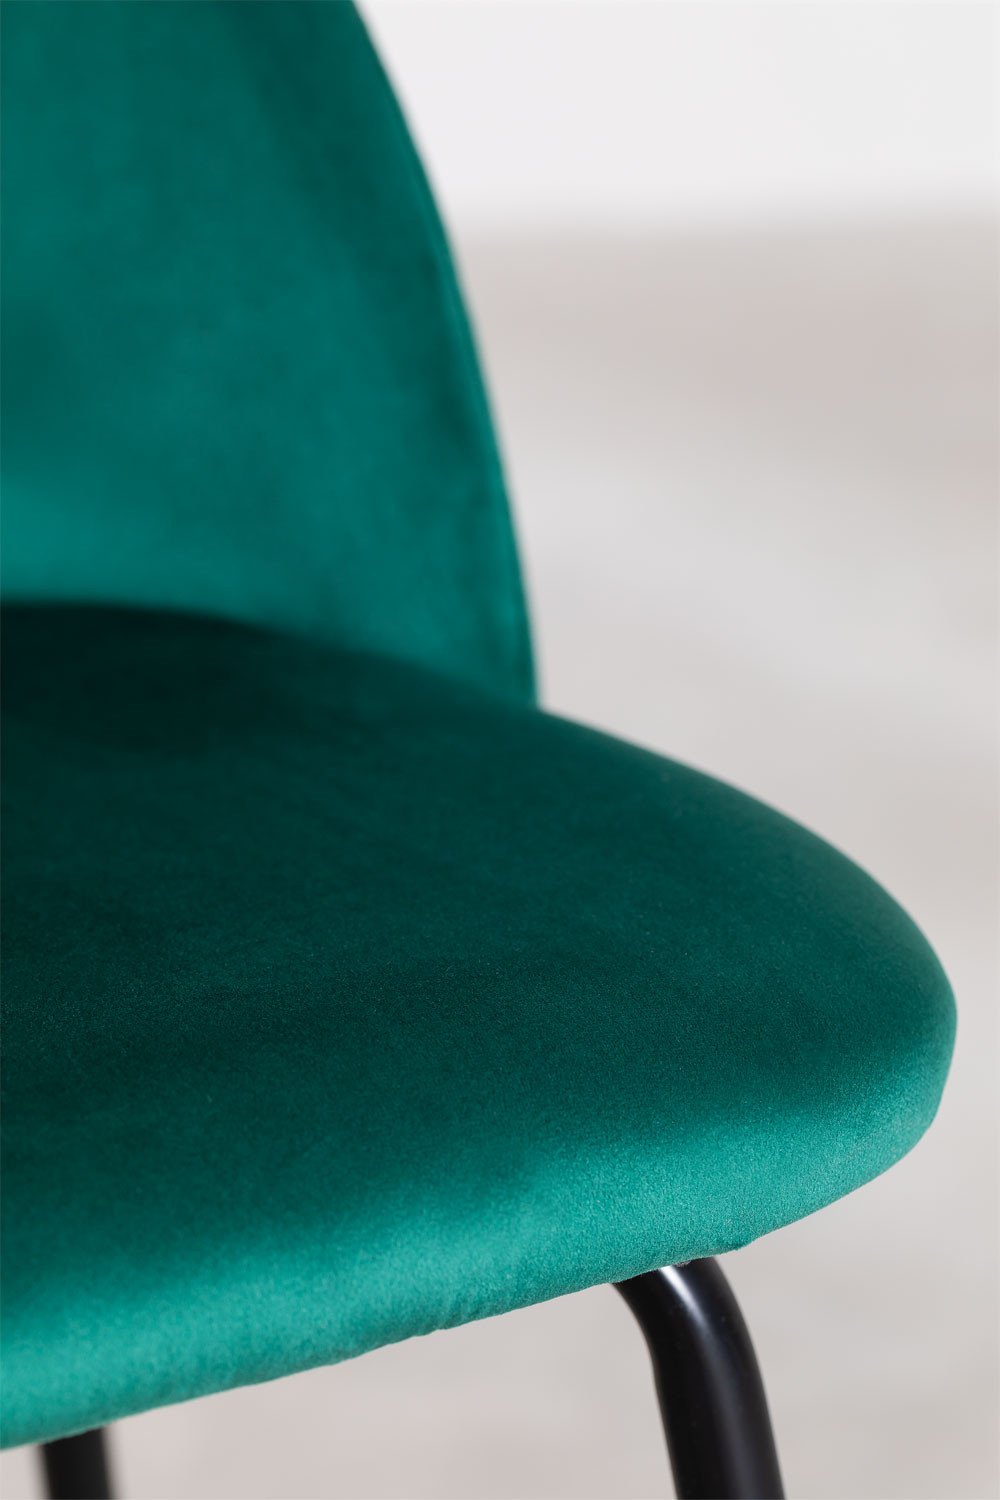 Taburete Alto en Terciopelo Kana Design ↑65 cm Verde Jungla Negro -  SKLUM